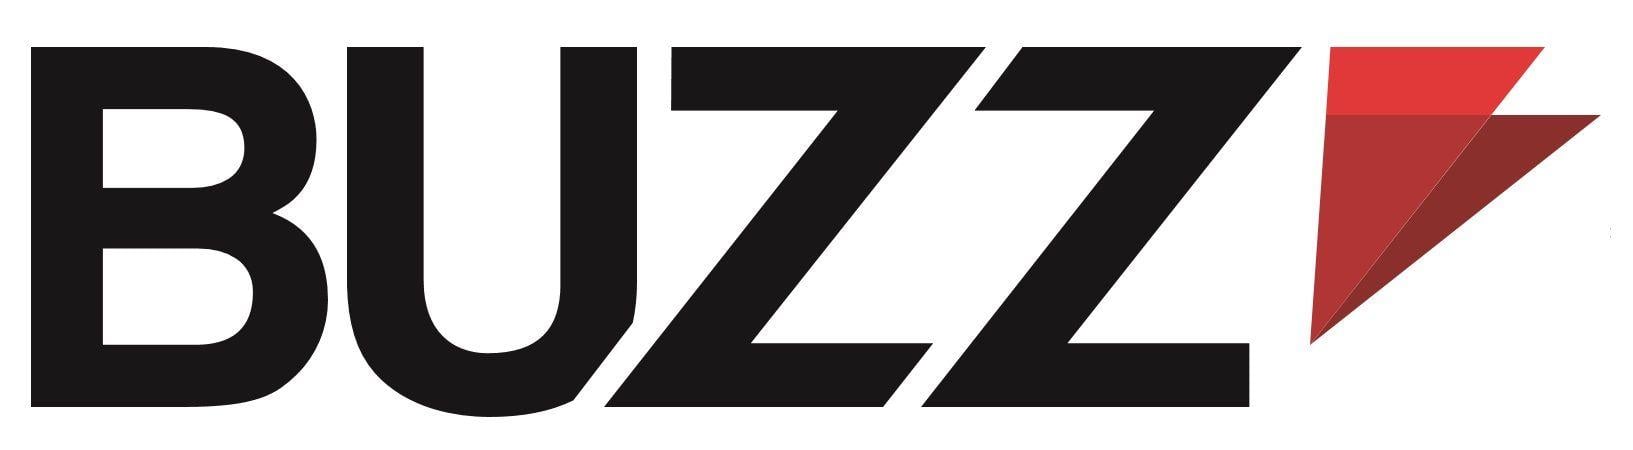 Buzz Logo - Buzz Logo. Men's Best Guide